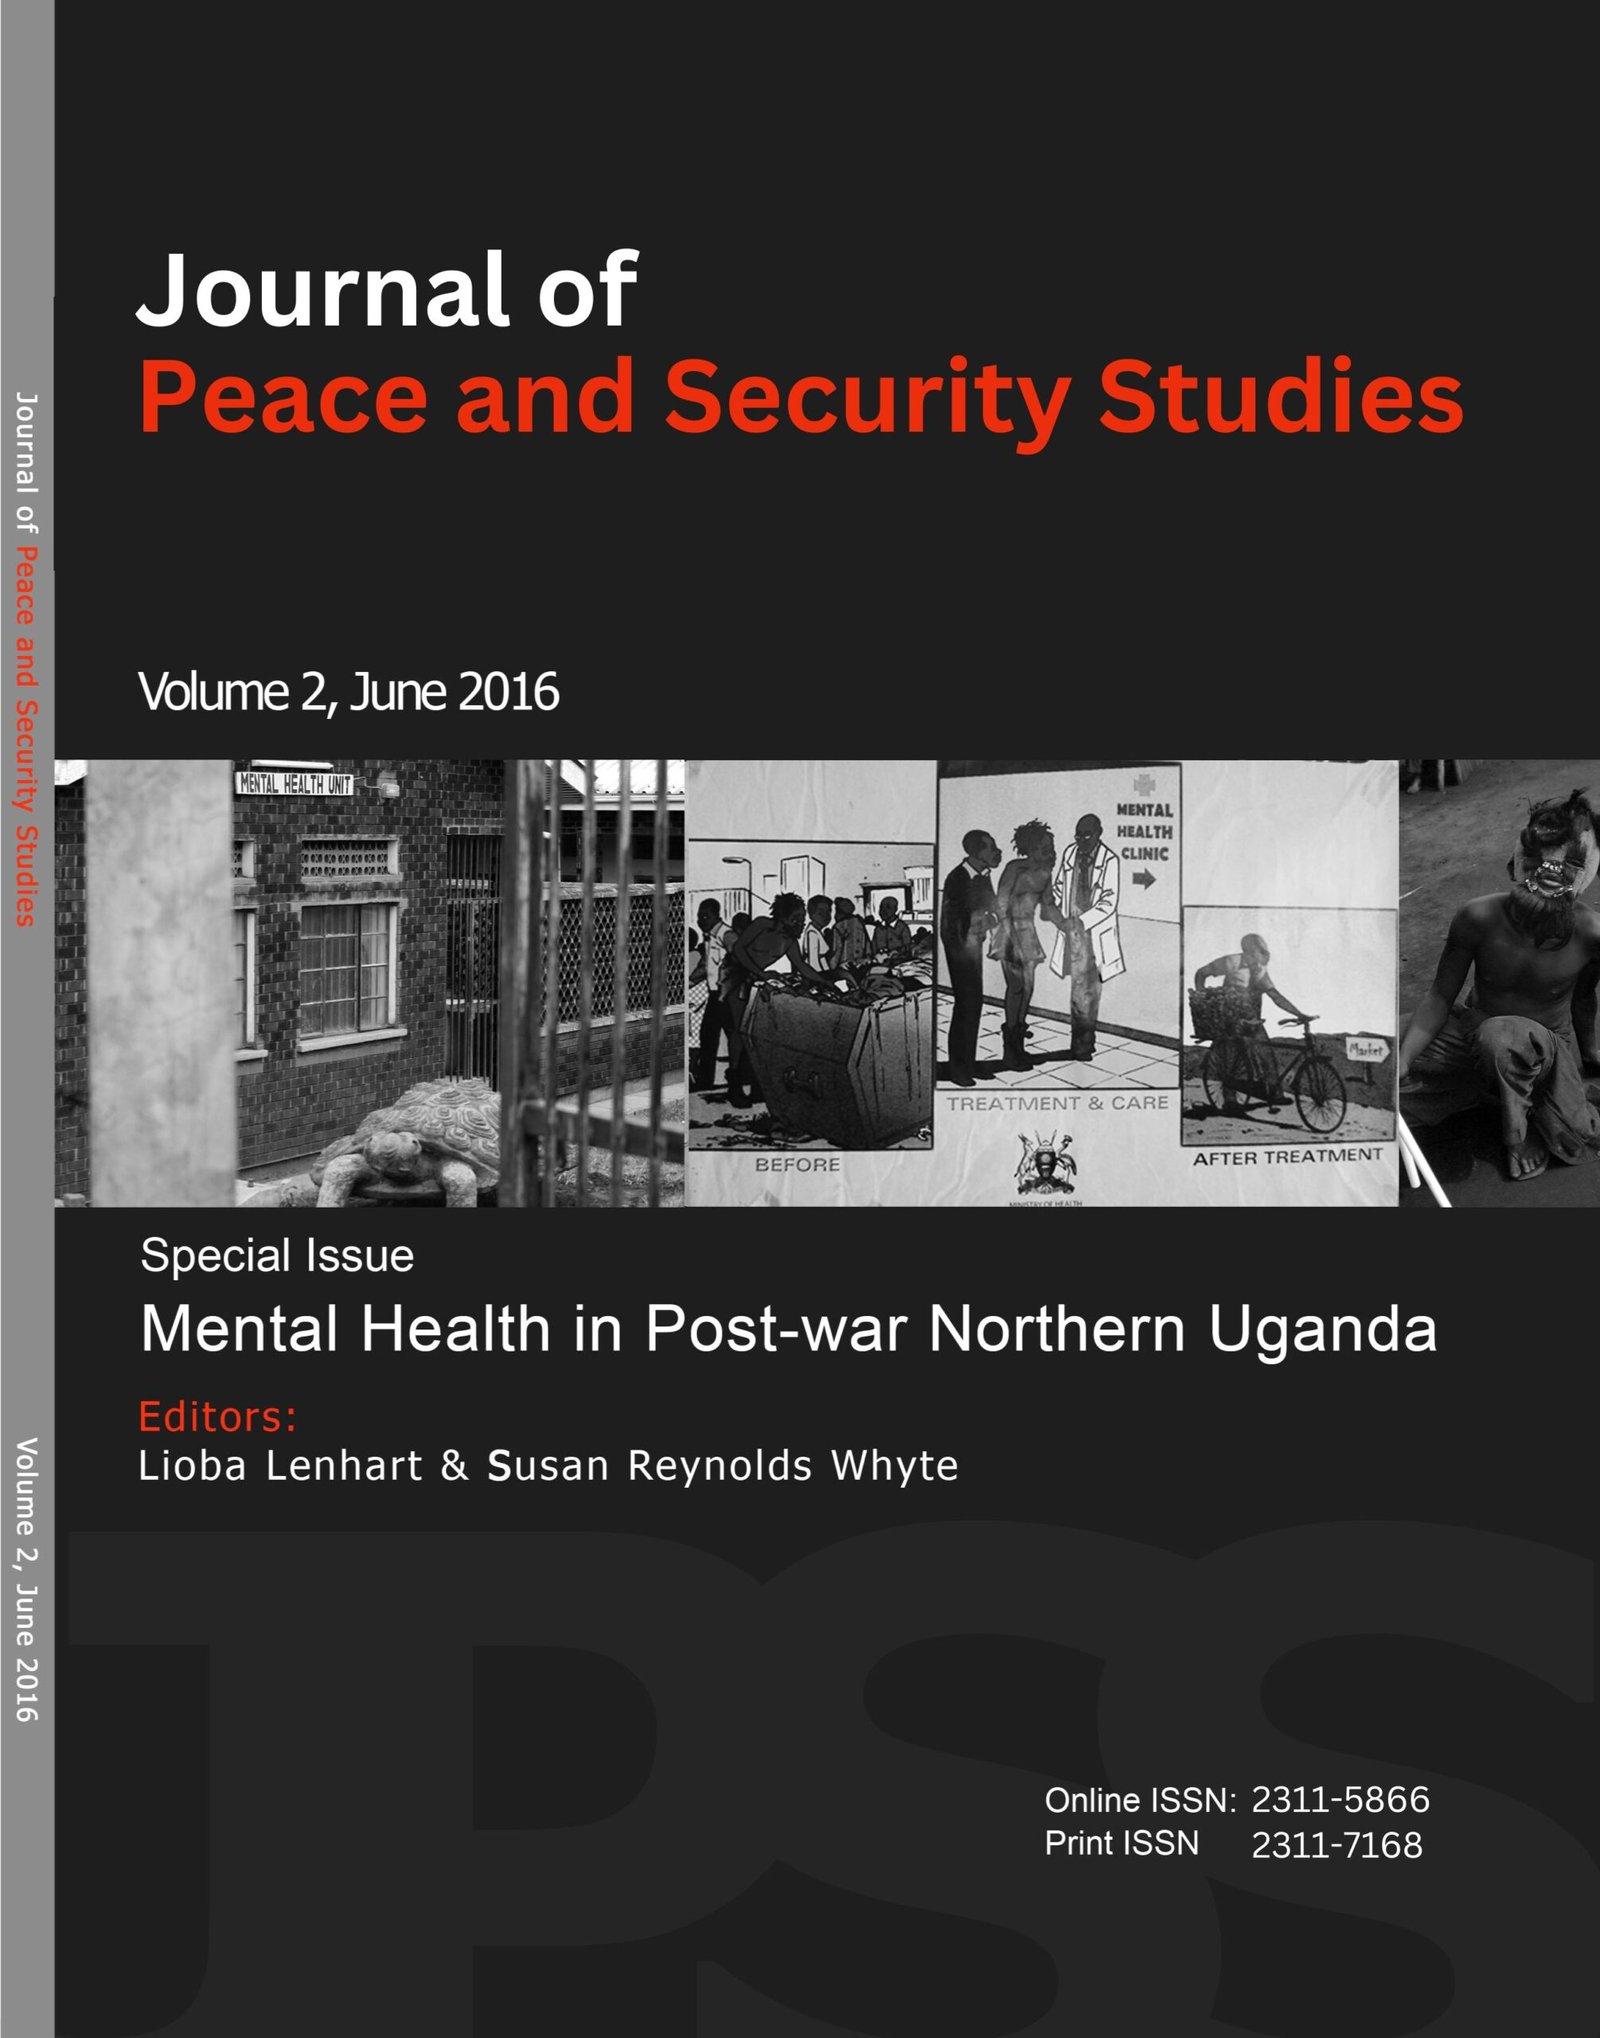 Mental Health in Post-war Northern Uganda